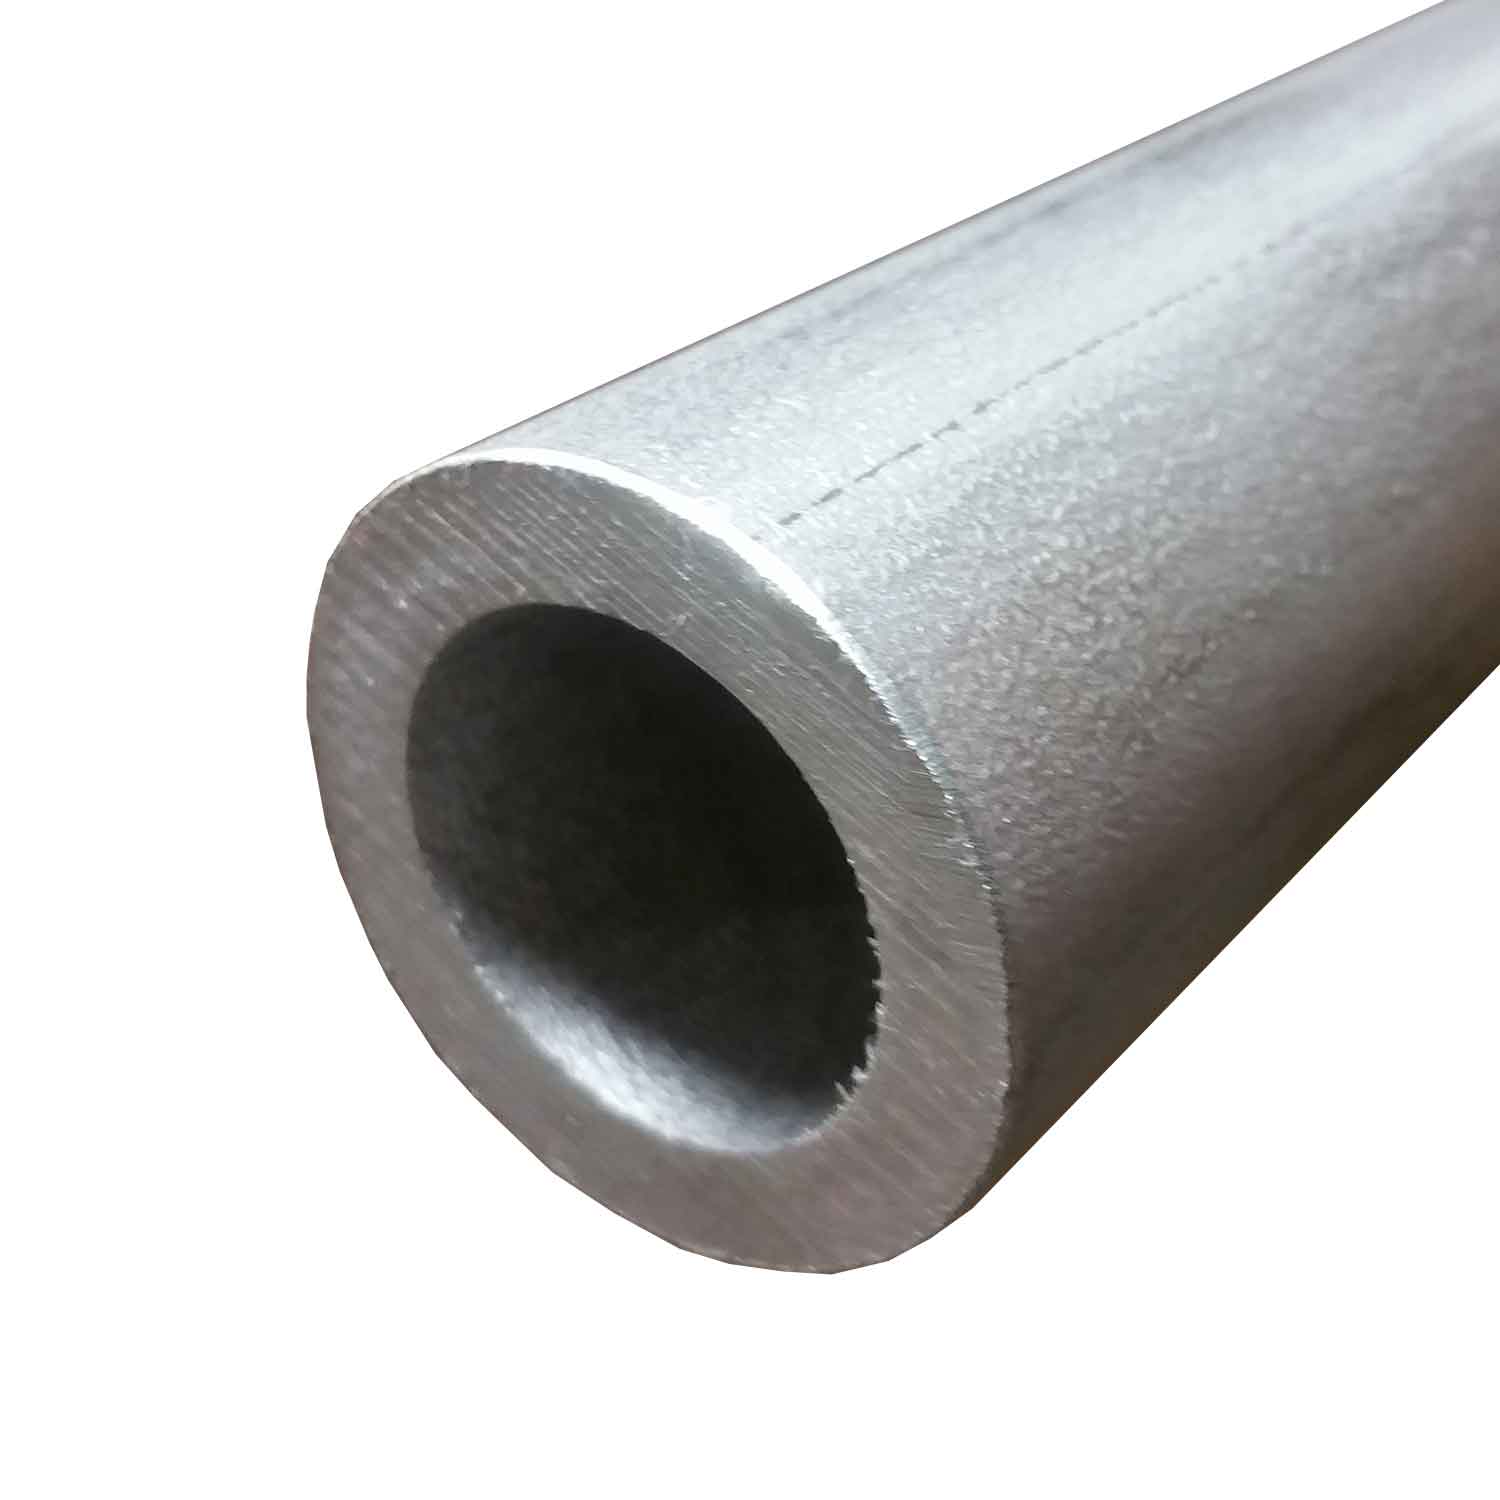 x 12 inches 0.687 Online Metal Supply 1018 CF Steel Round Rod 11//16 inch